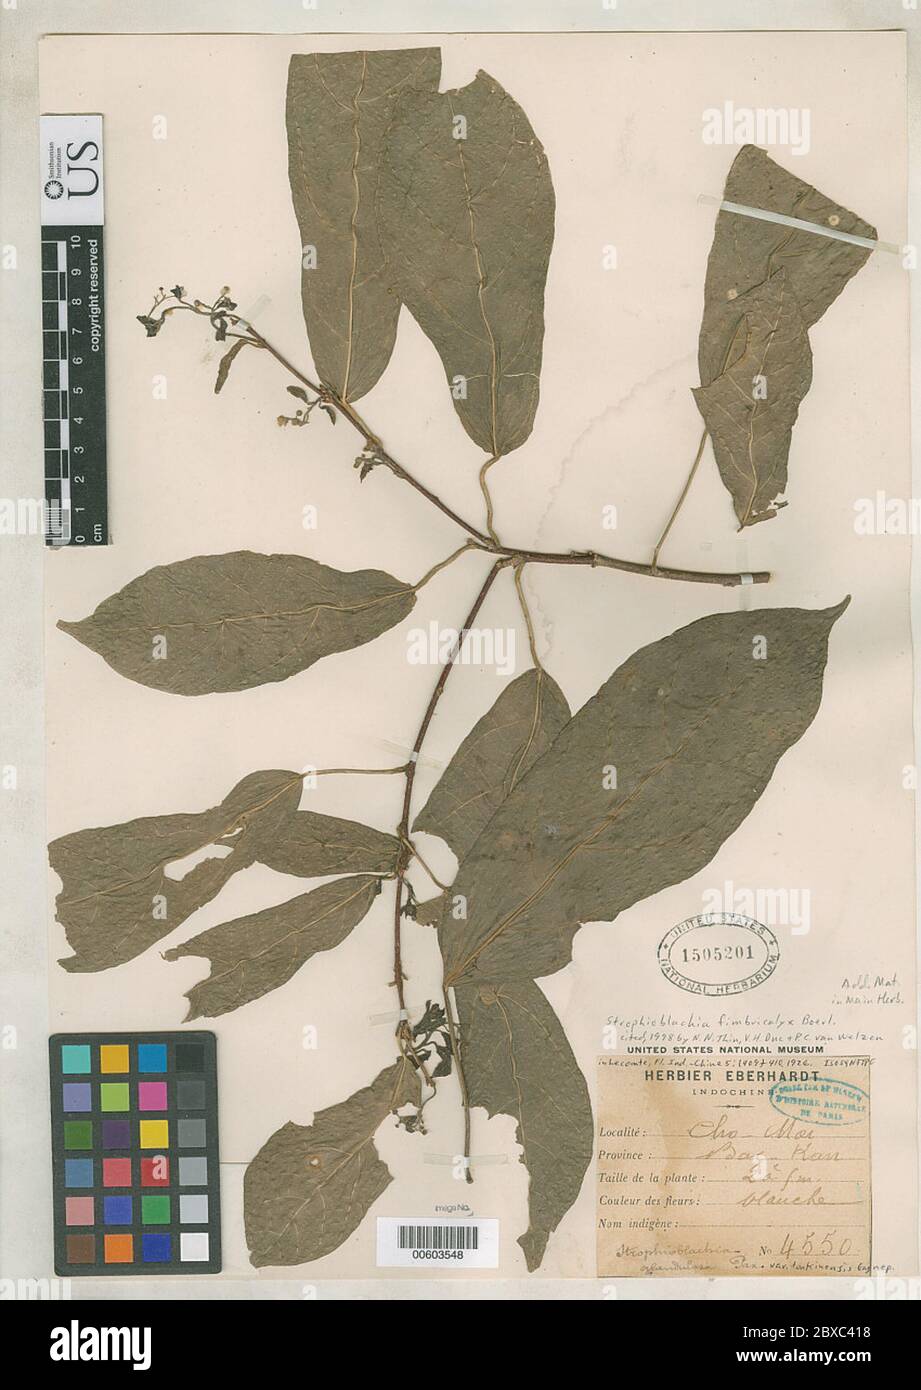 Strophioblachia glandulosa var tonkinensis Gagnep in Lecomte Strophioblachia glandulosa var tonkinensis Gagnep in Lecomte. Stock Photo